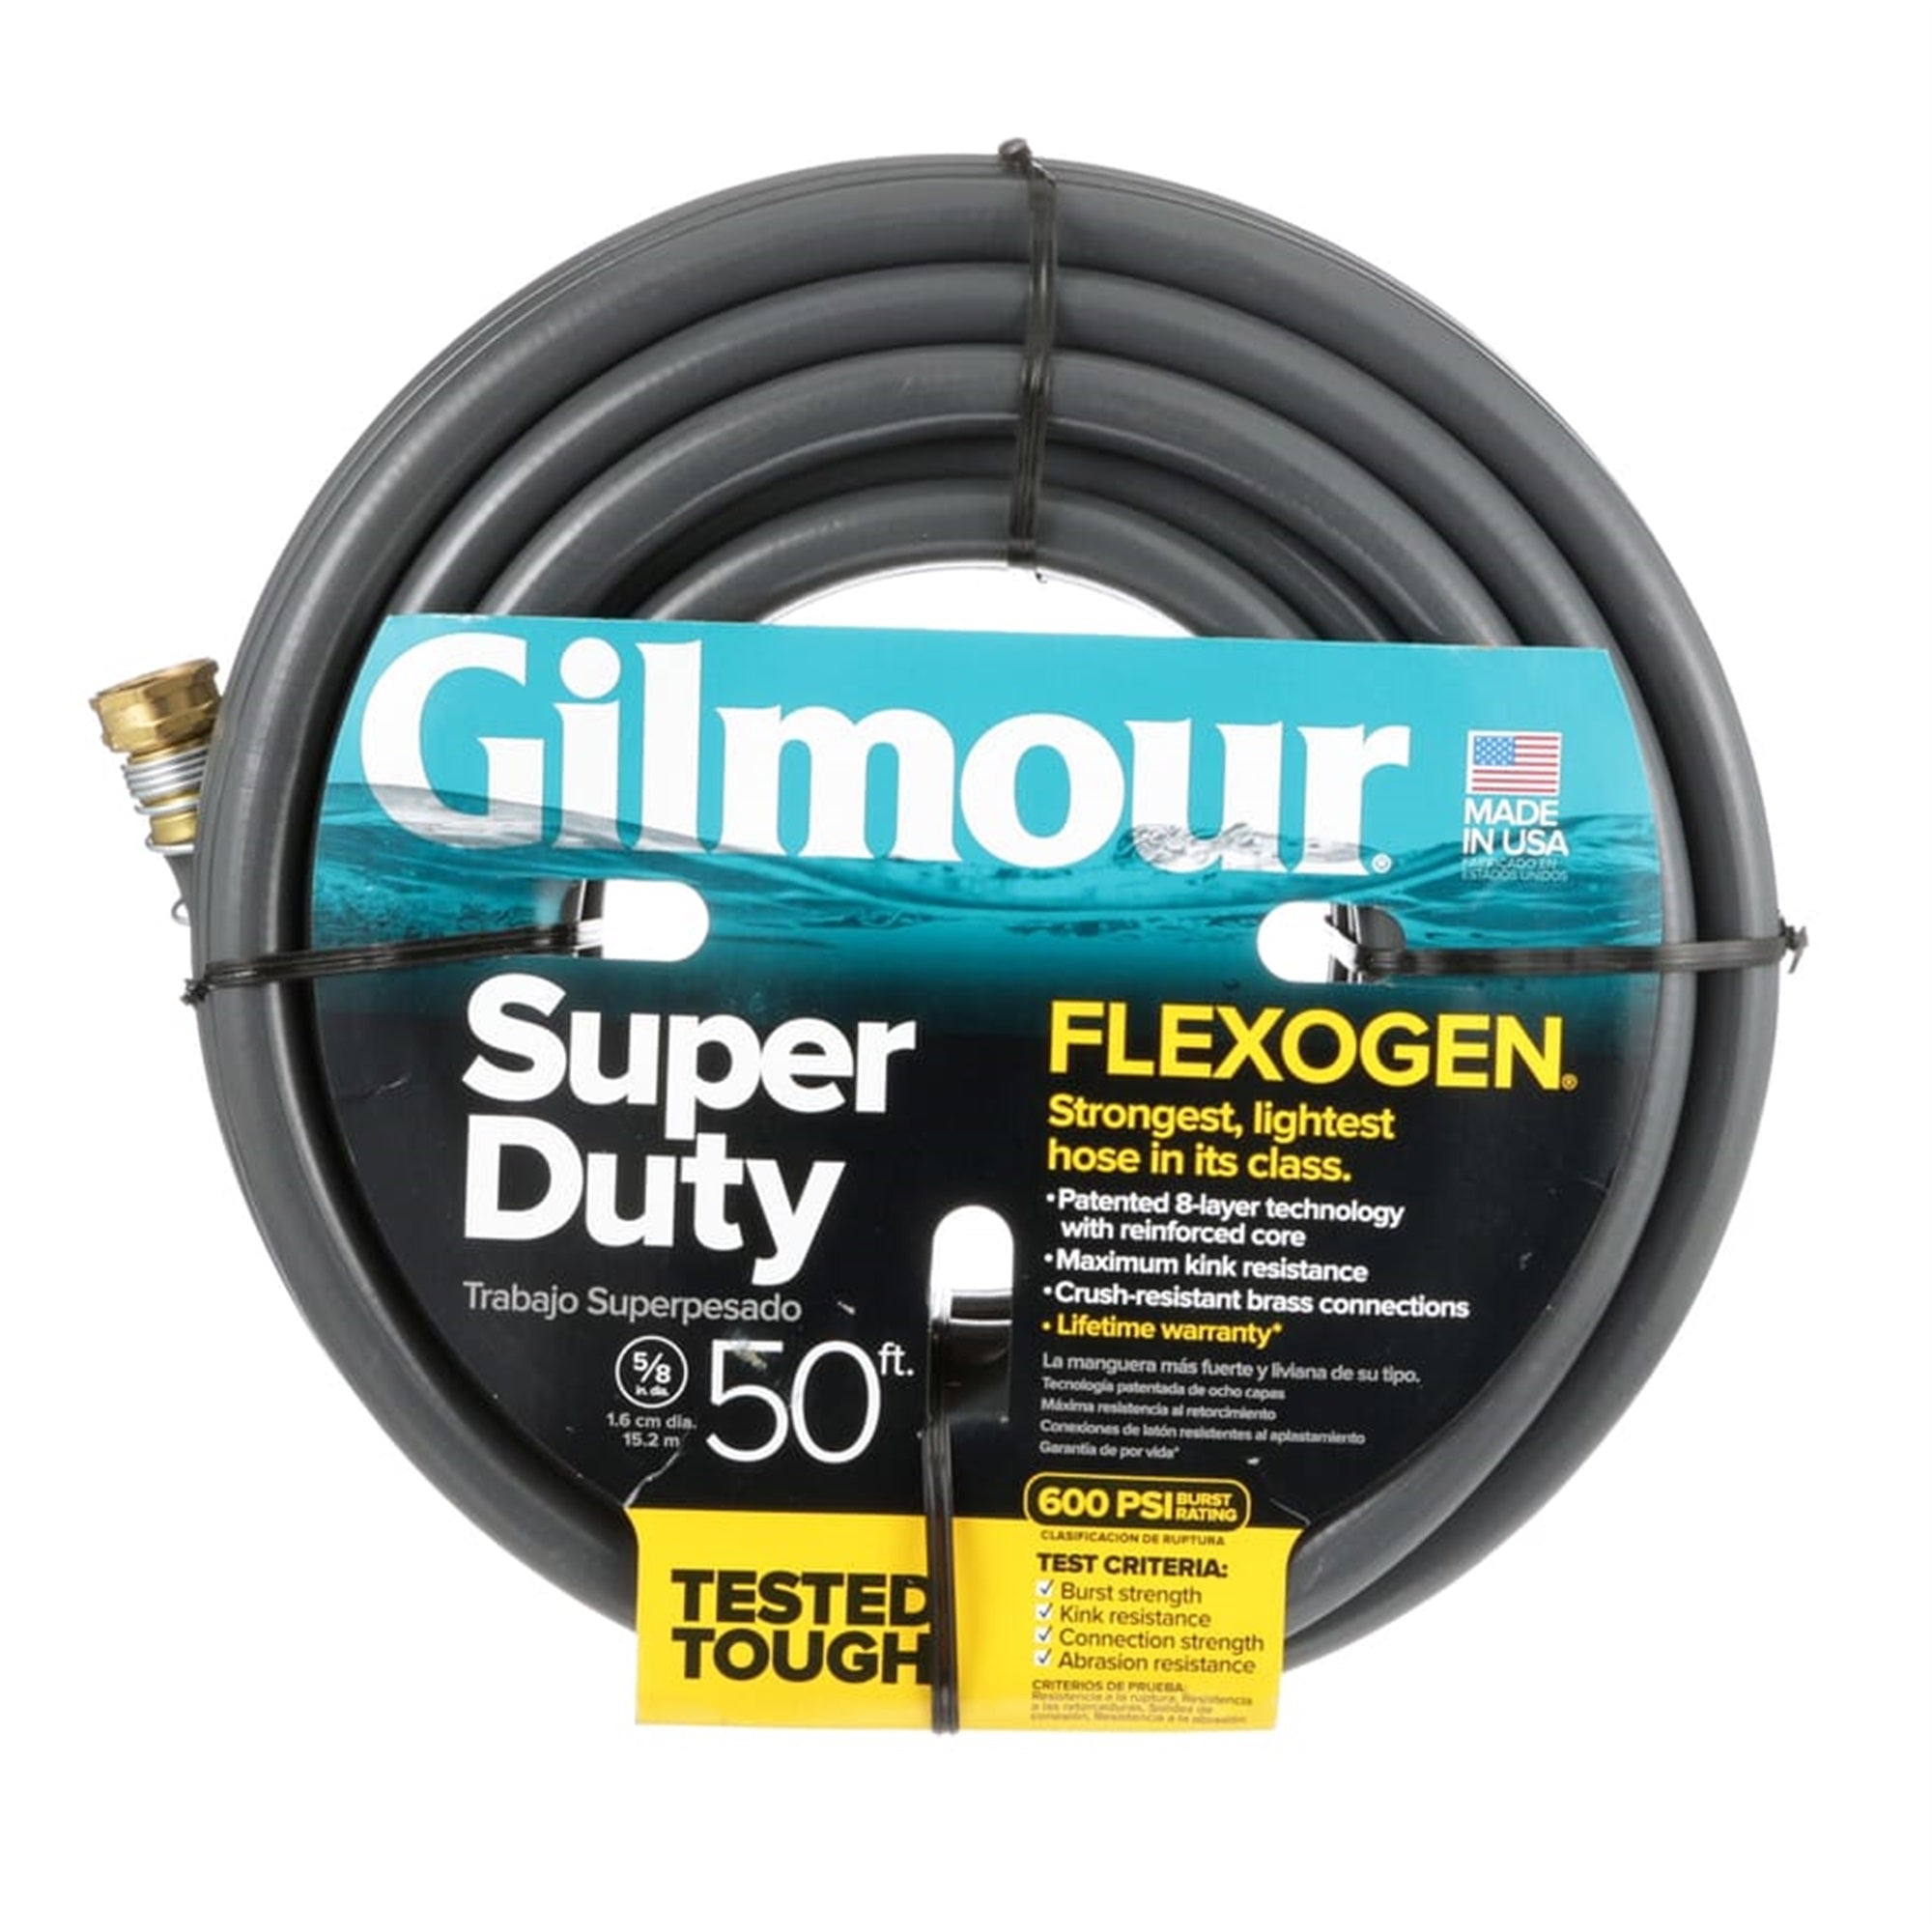 Gilmour Super Duty Flexogen 5/8 Inch x 50 Foot Hose